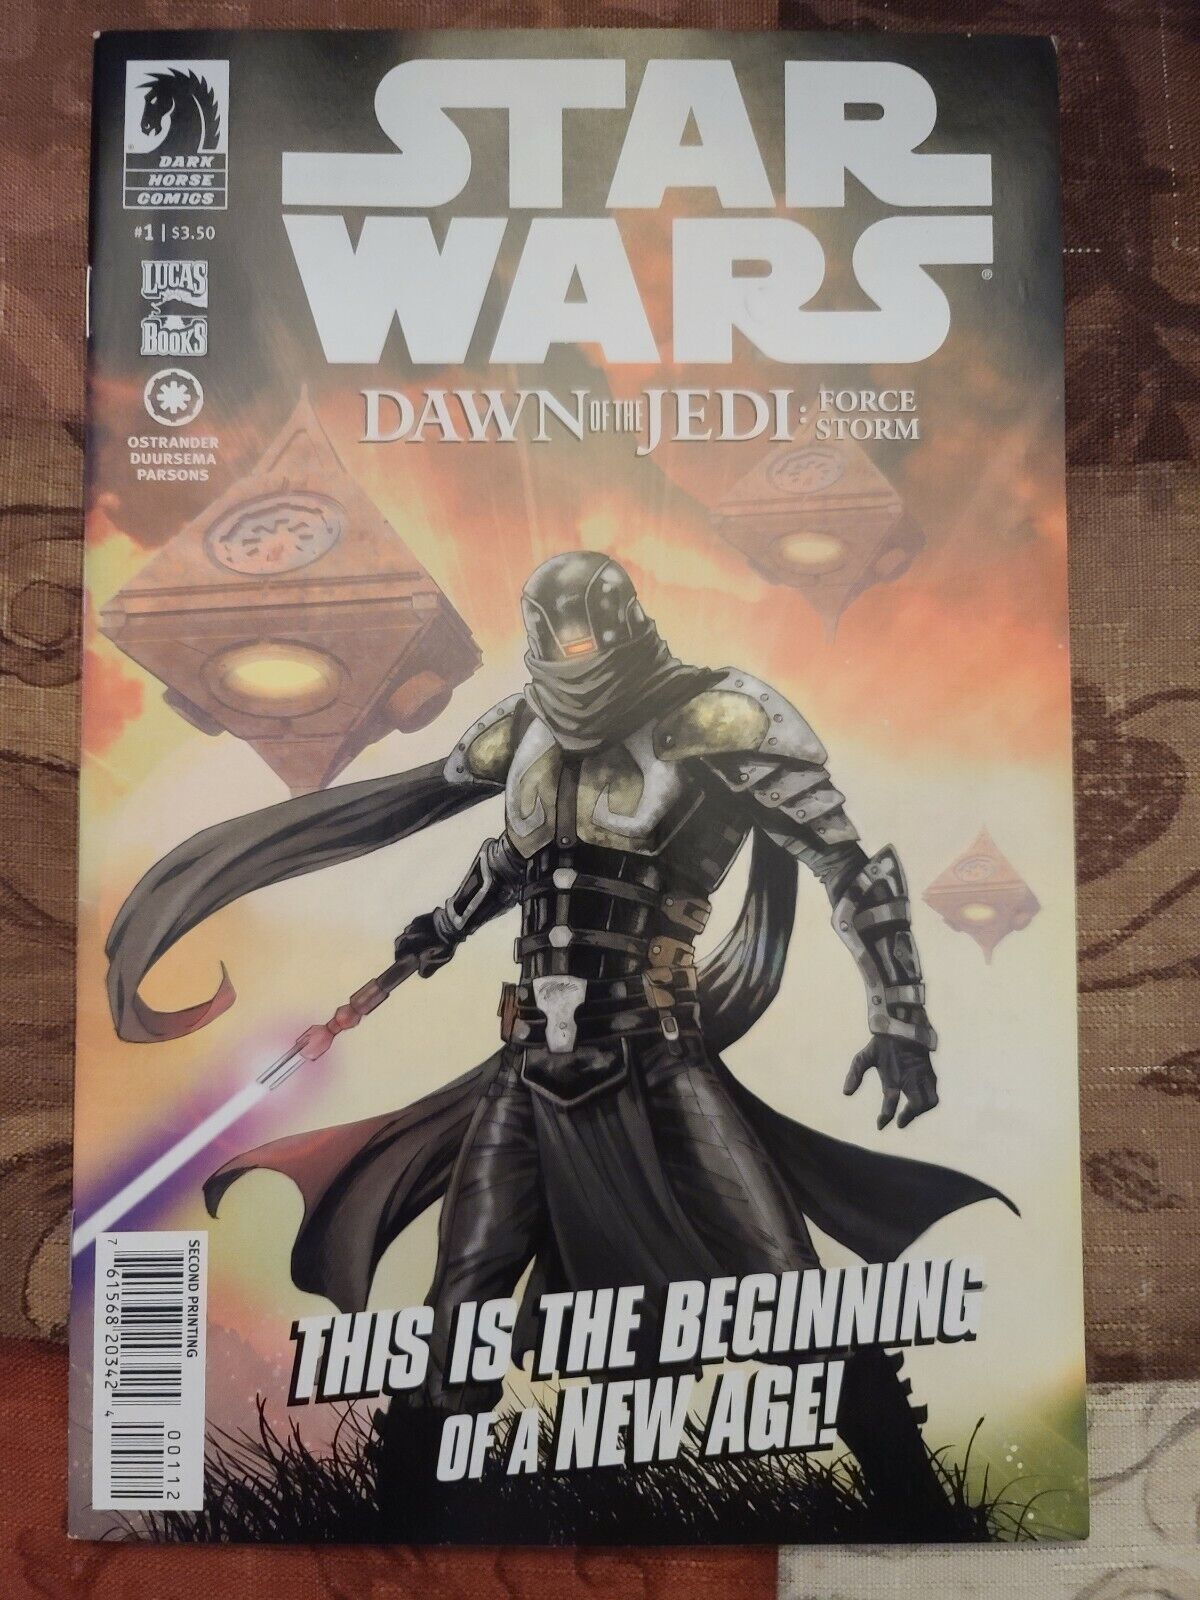 Star Wars - Dawn of the Jedi: Force Storm #1 (Dark Horse, 2012) 2ND PRINTING